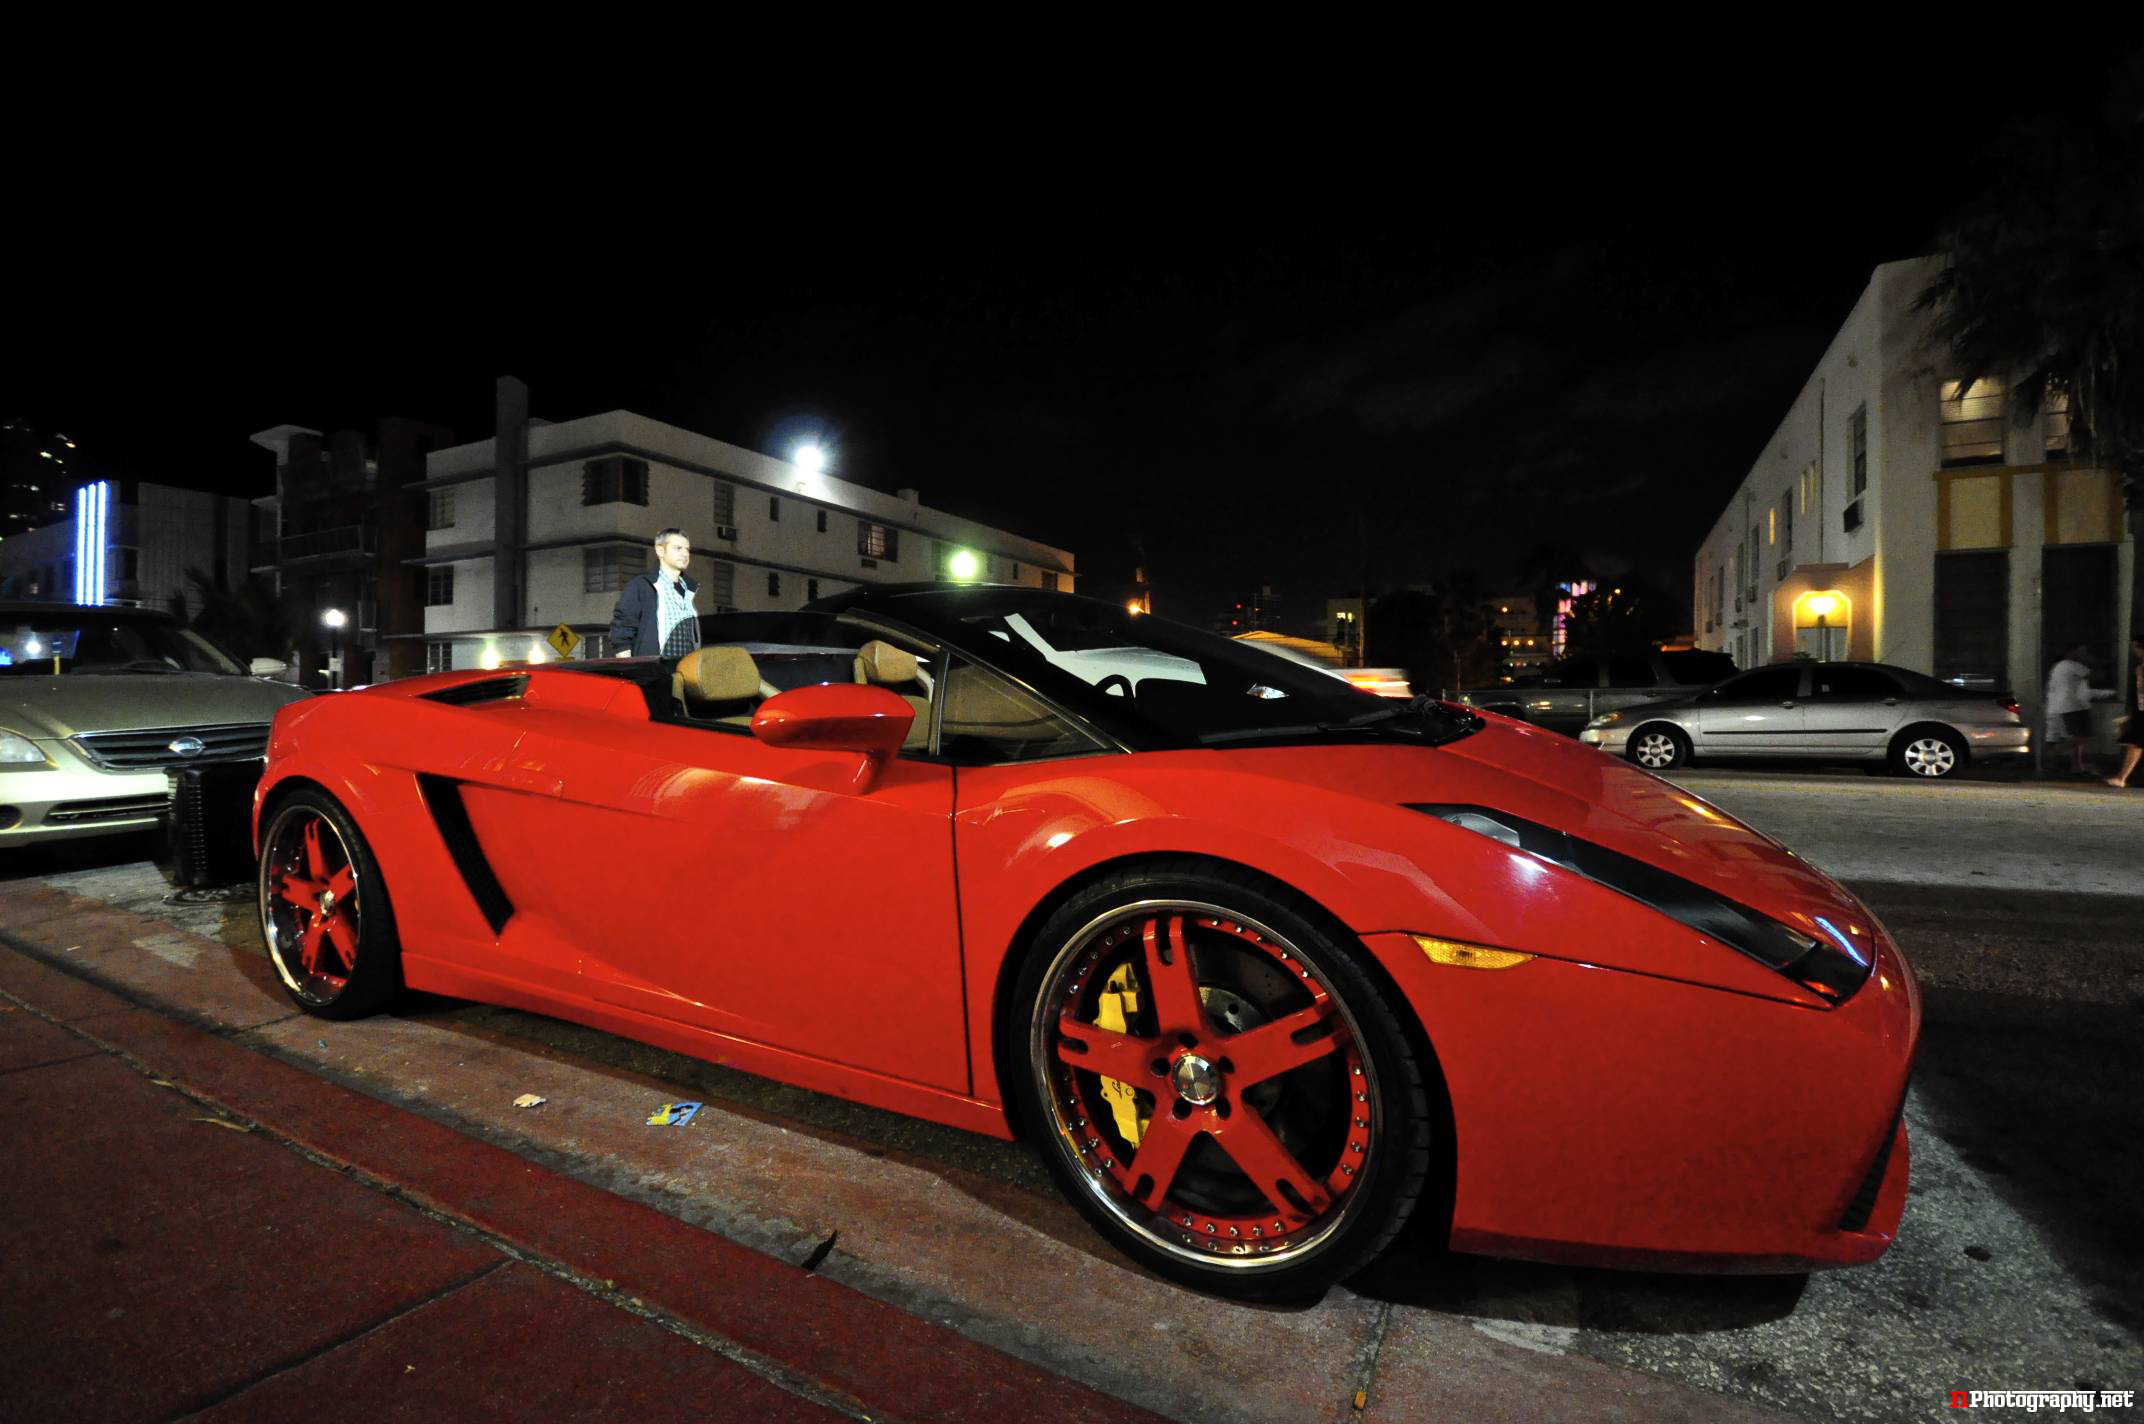 Lil Wayne's Lamborghini Gallardo Spyder | Flickr - Photo ...